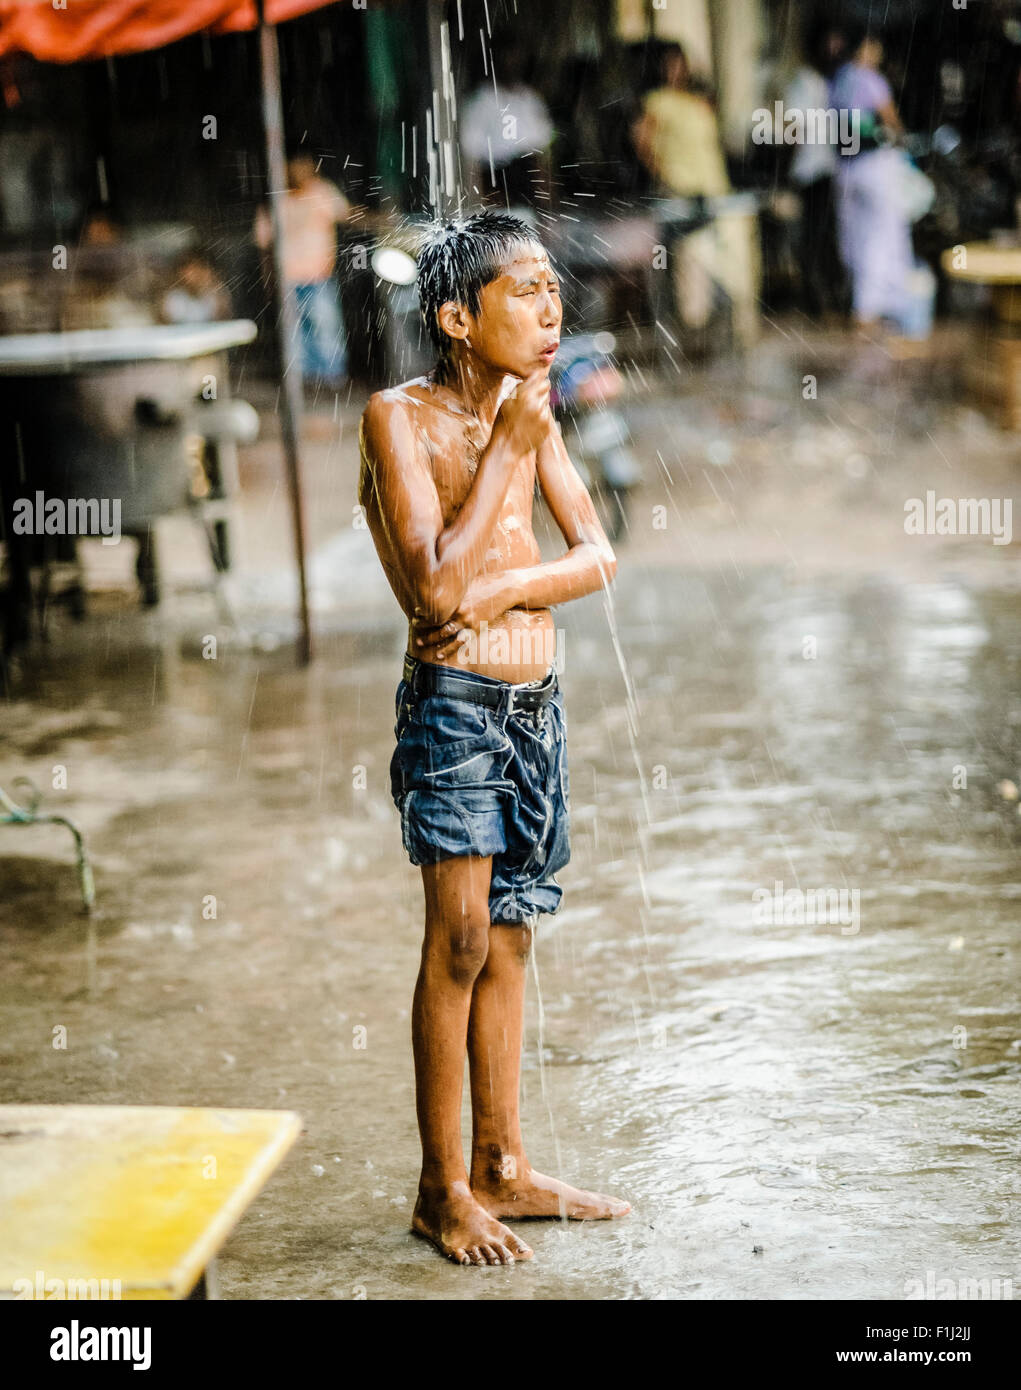 Burmesische junge nimmt Dusche im Regen tropft aus einer Plane Stockfoto